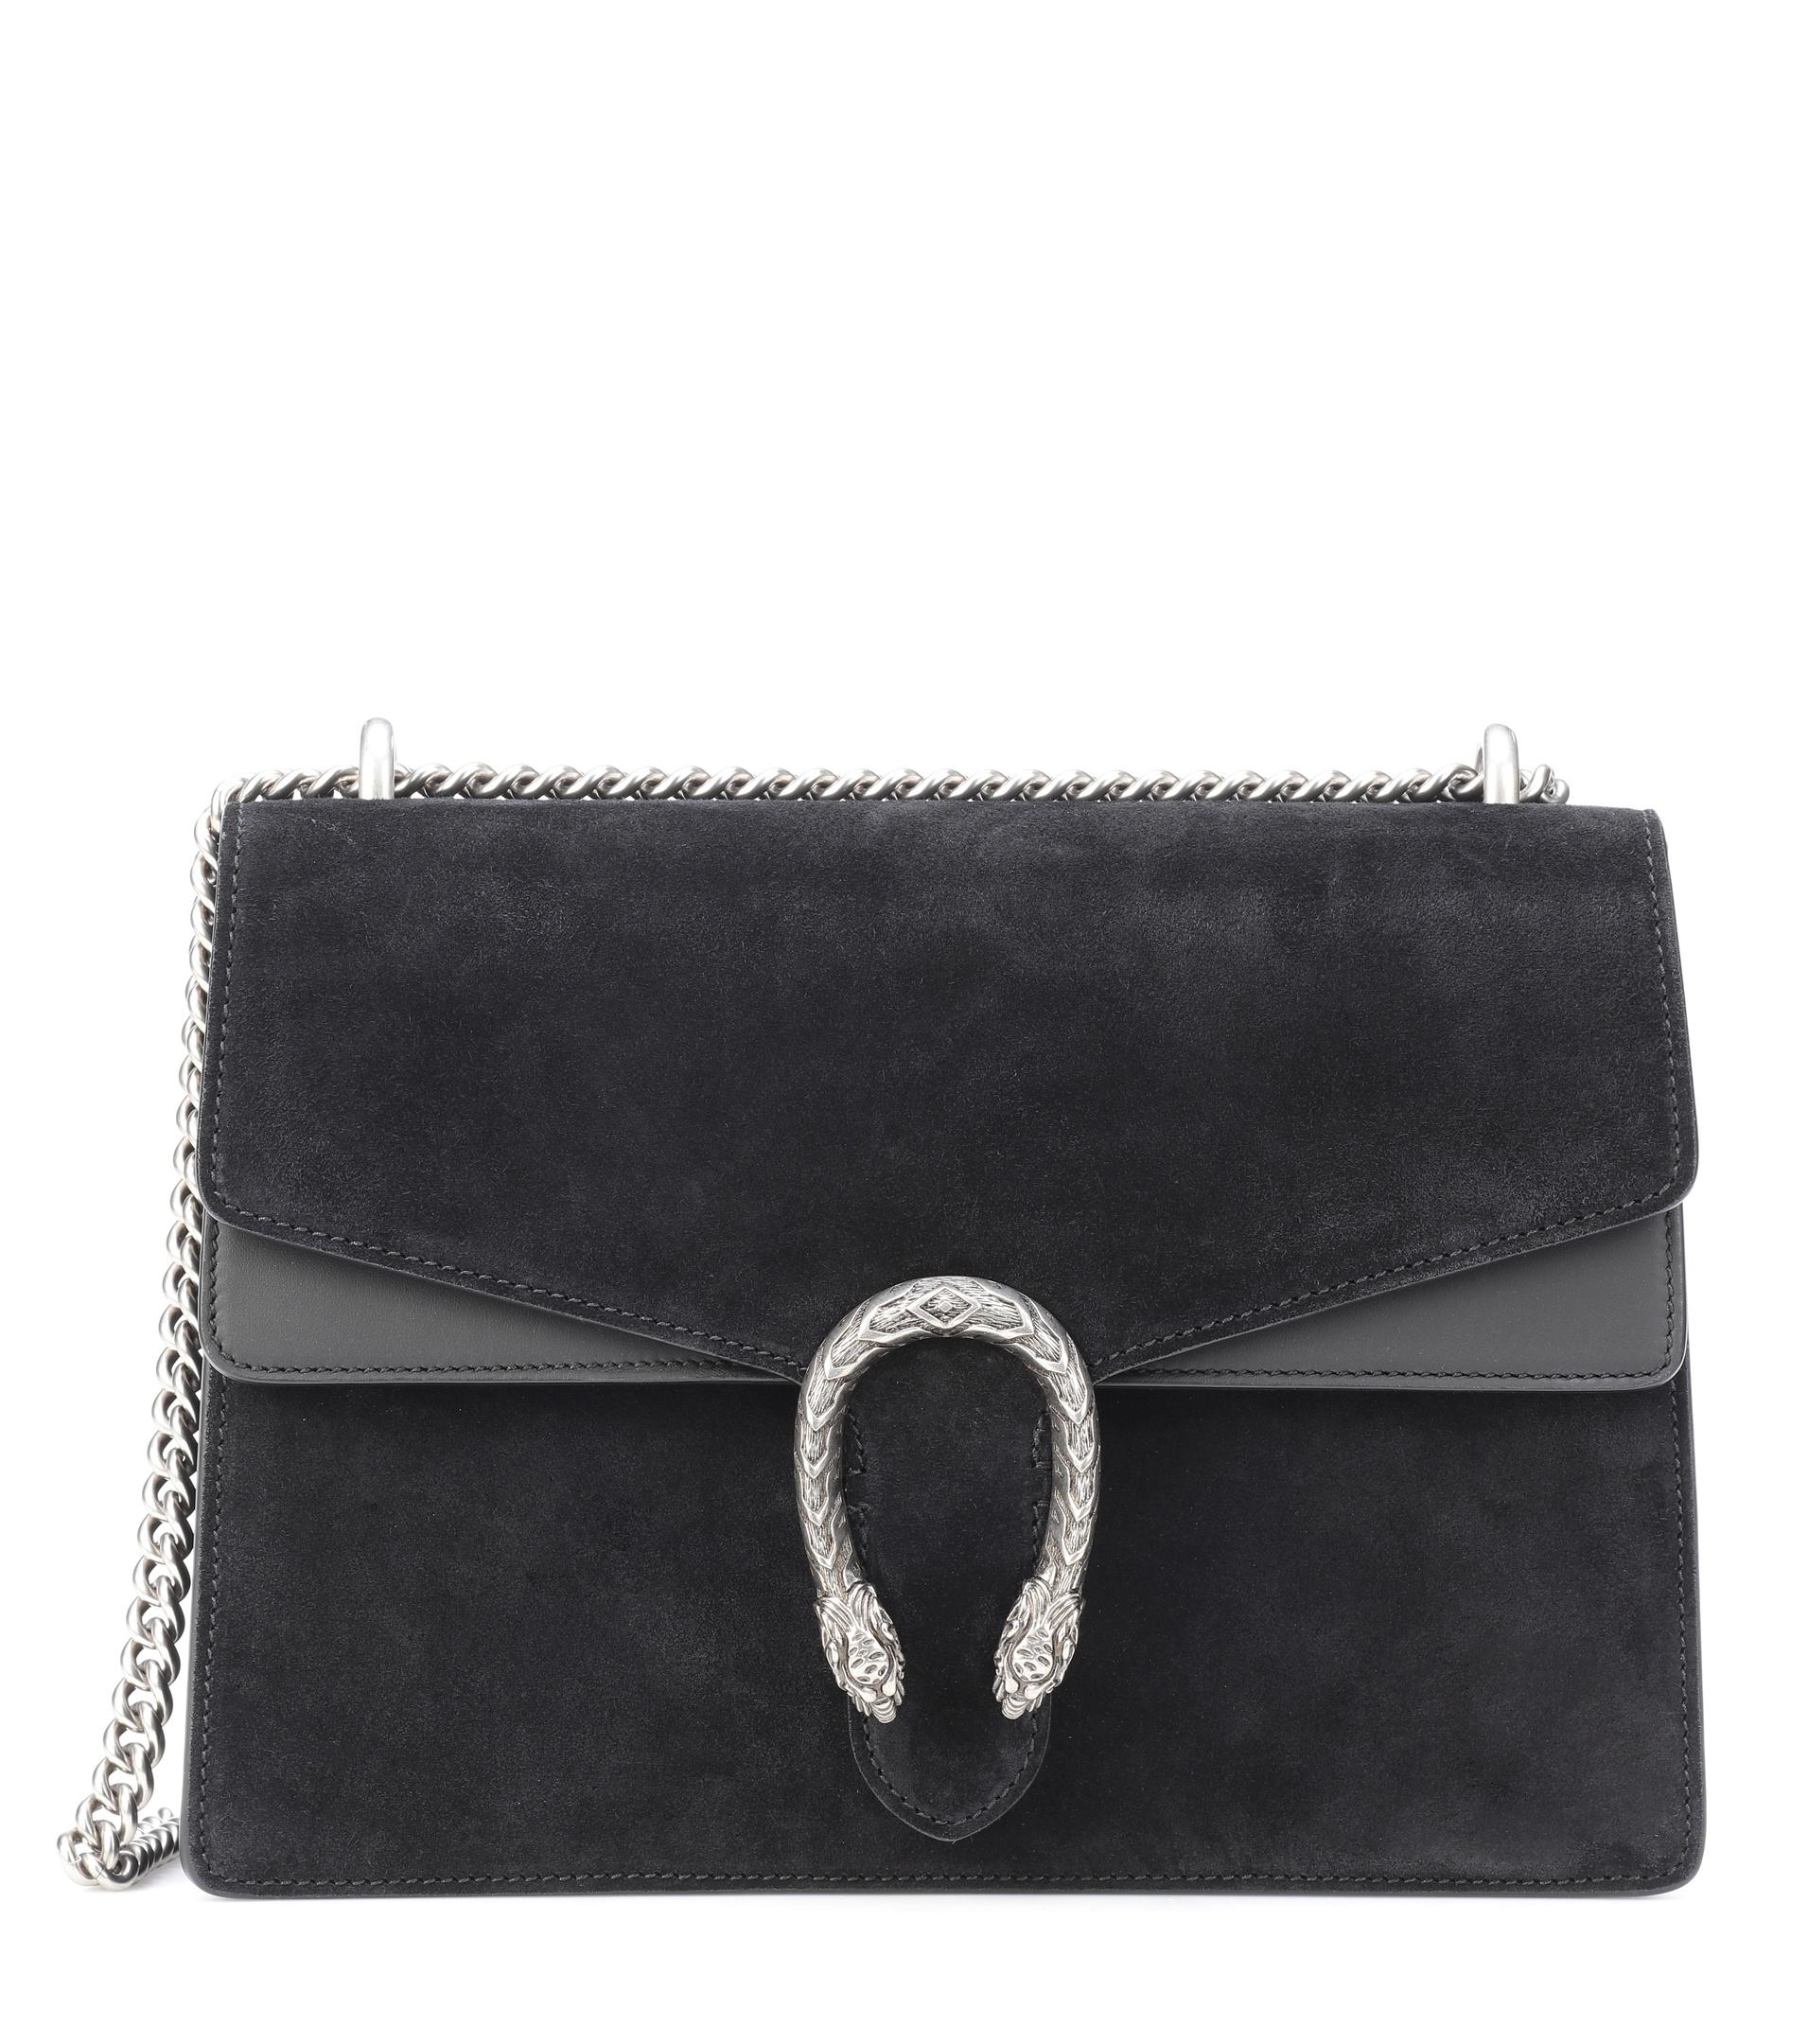 Lyst - Gucci Dionysus Leather Shoulder Bag in Black